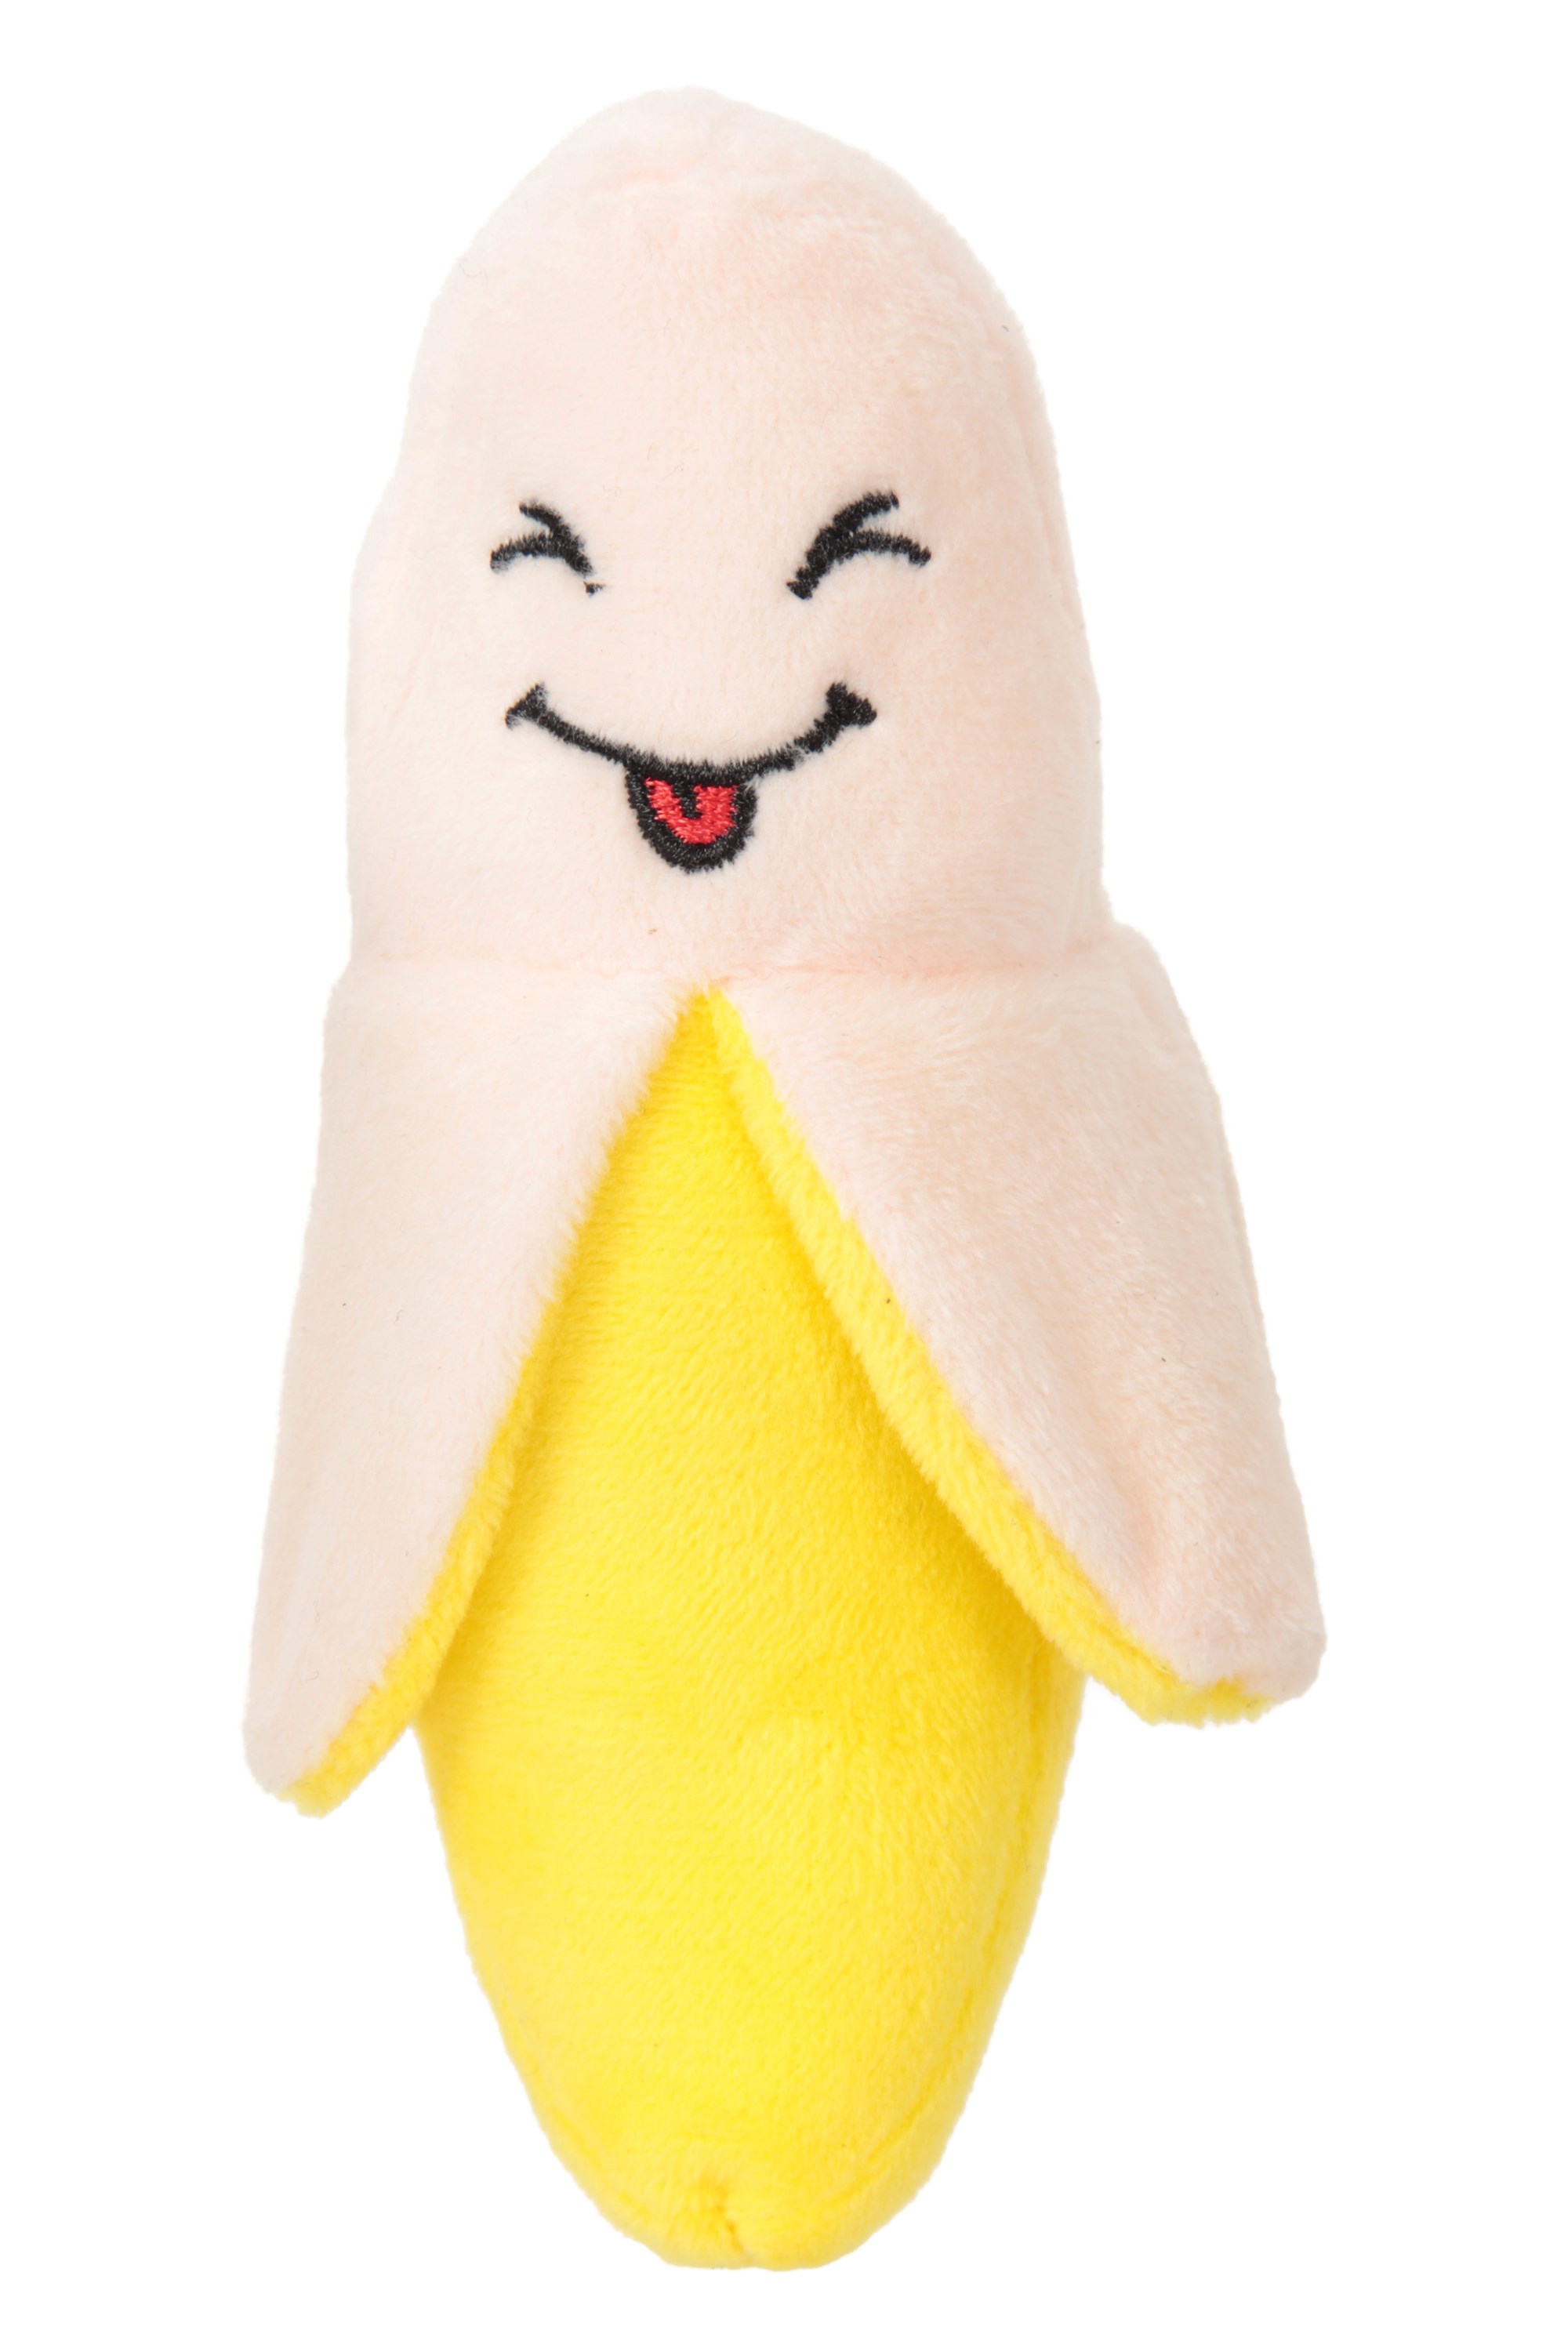 Soft Squeaky Banana Toy - Yellow